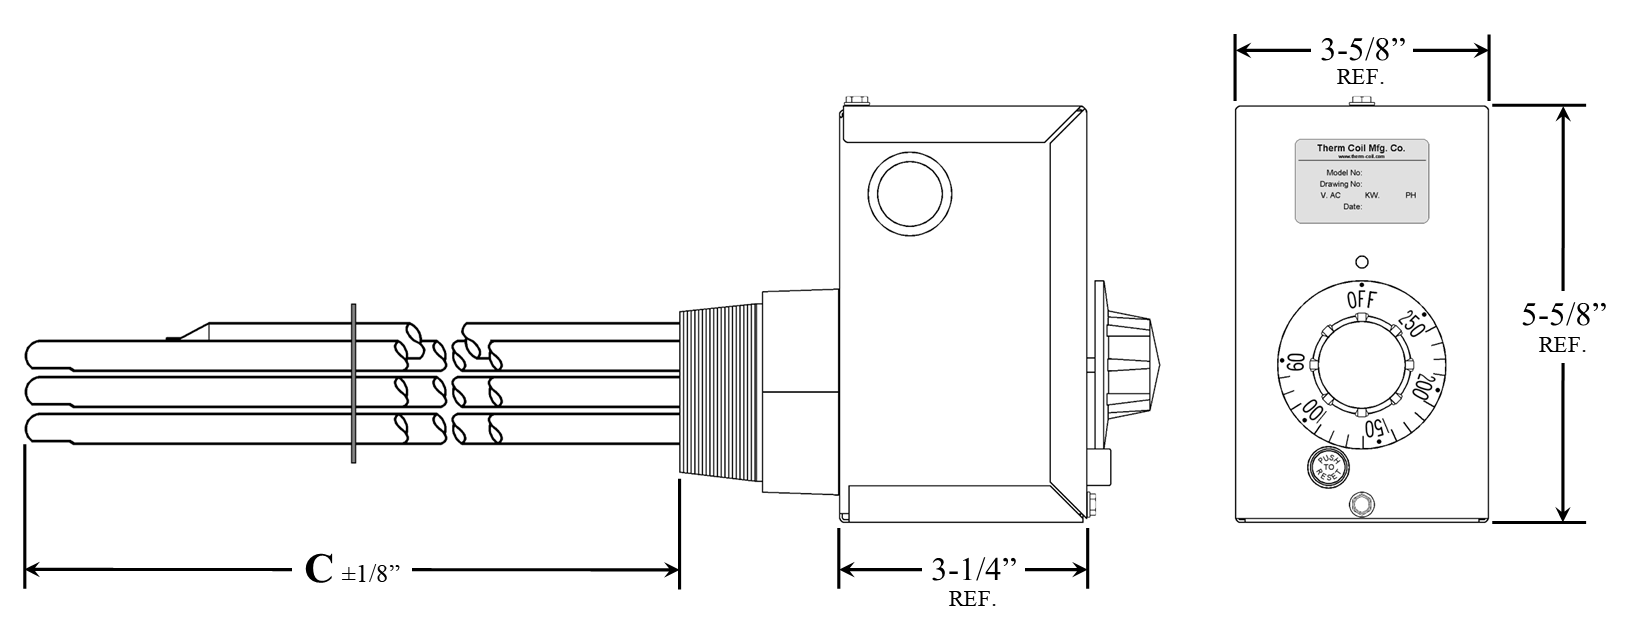 HA-3053 Model: 3000W @ 480V 3-Phase, 10-1/2" Immersion Length Regulated 2" NPT Commercial Dishwasher Heating Elements